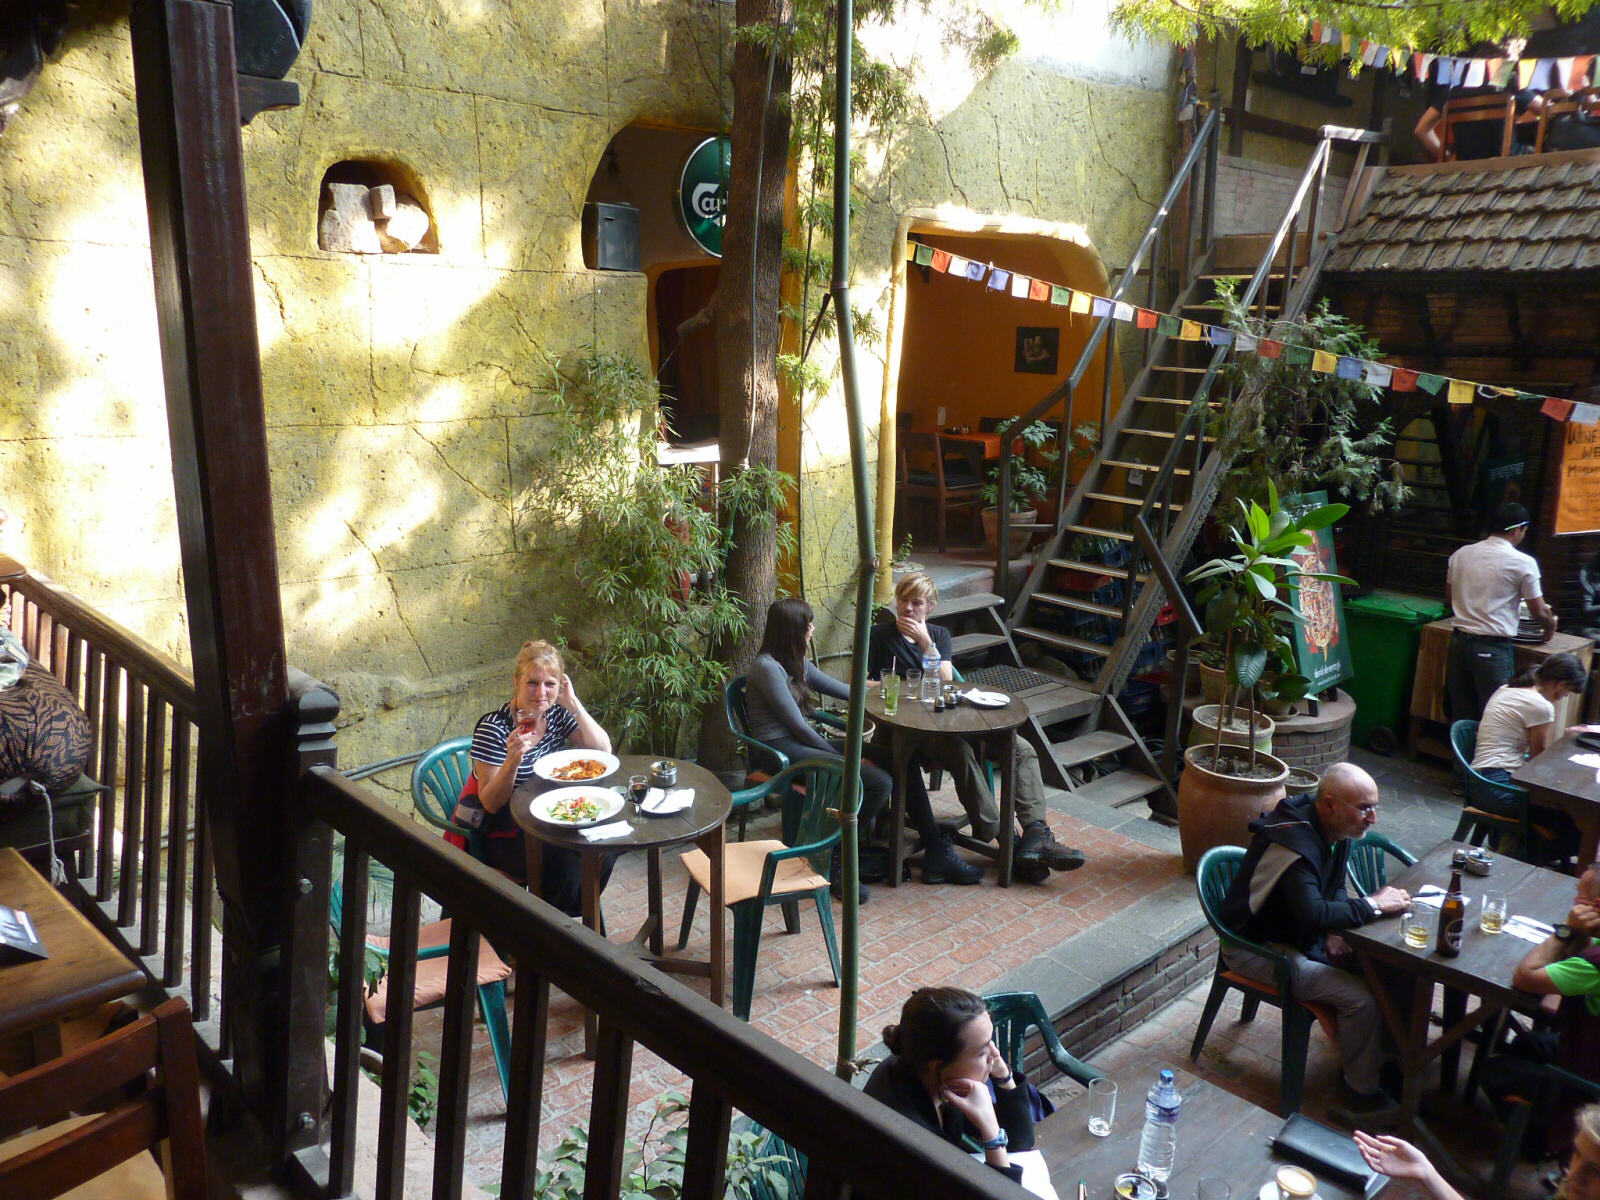 The New Orleans cafe in Thamel, Kathmandu